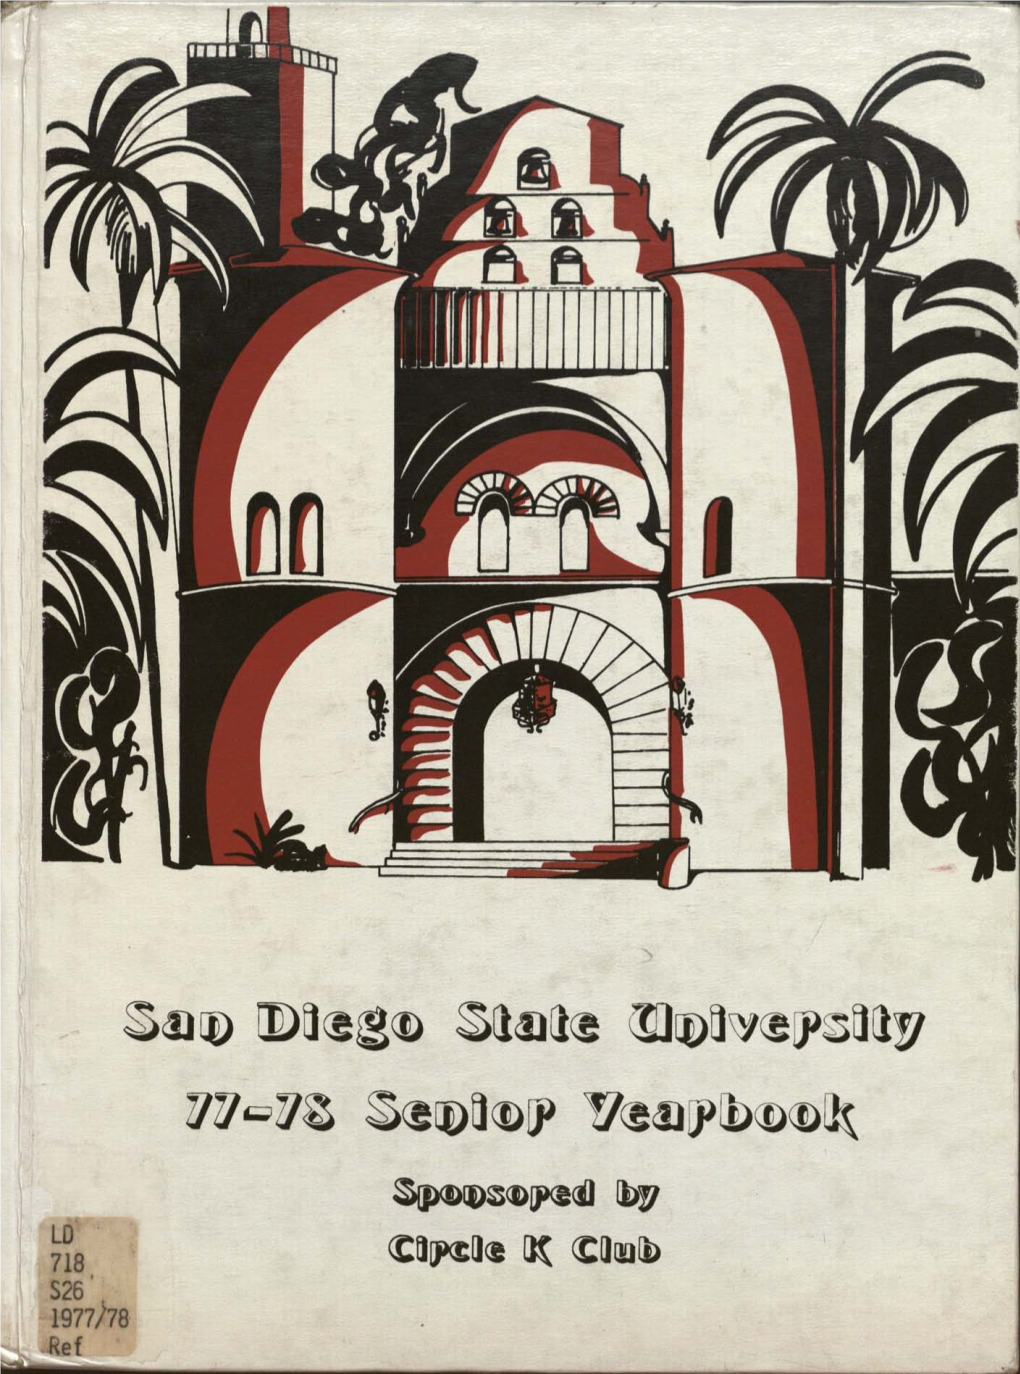 "San Diego State University Senior Yearbook"